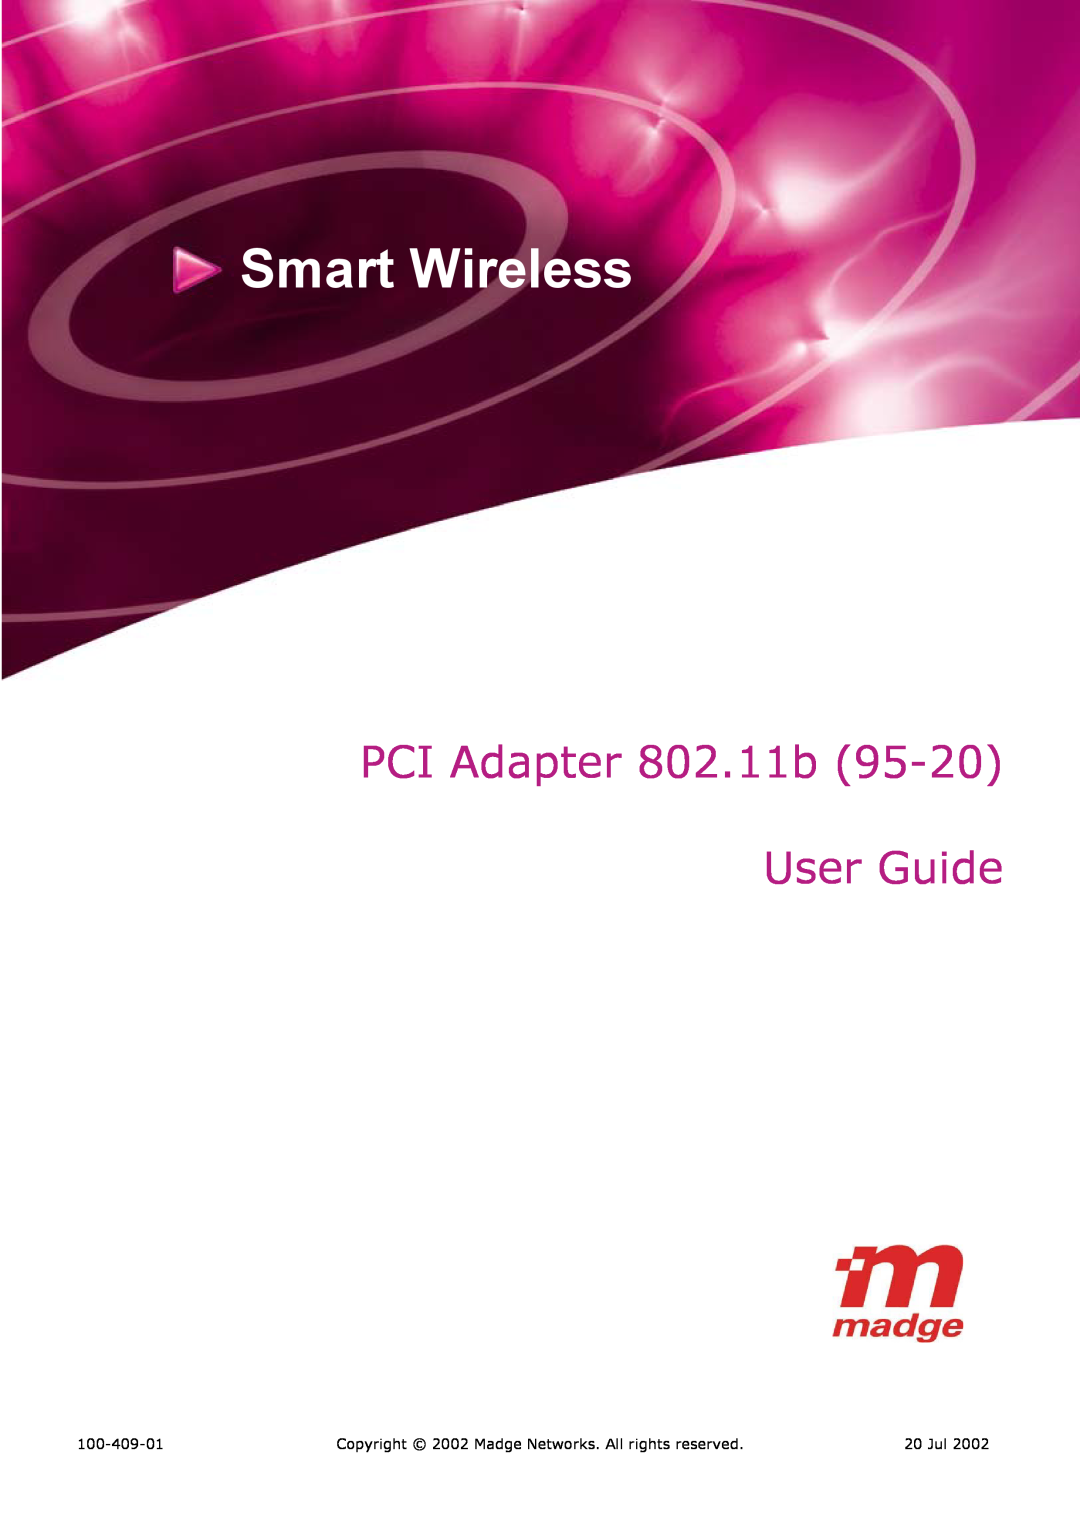 Madge Networks 802.11B (95-20) manual Smart Wireless, PCI Adapter 802.11b User Guide, 100-409-01, 20 Jul 